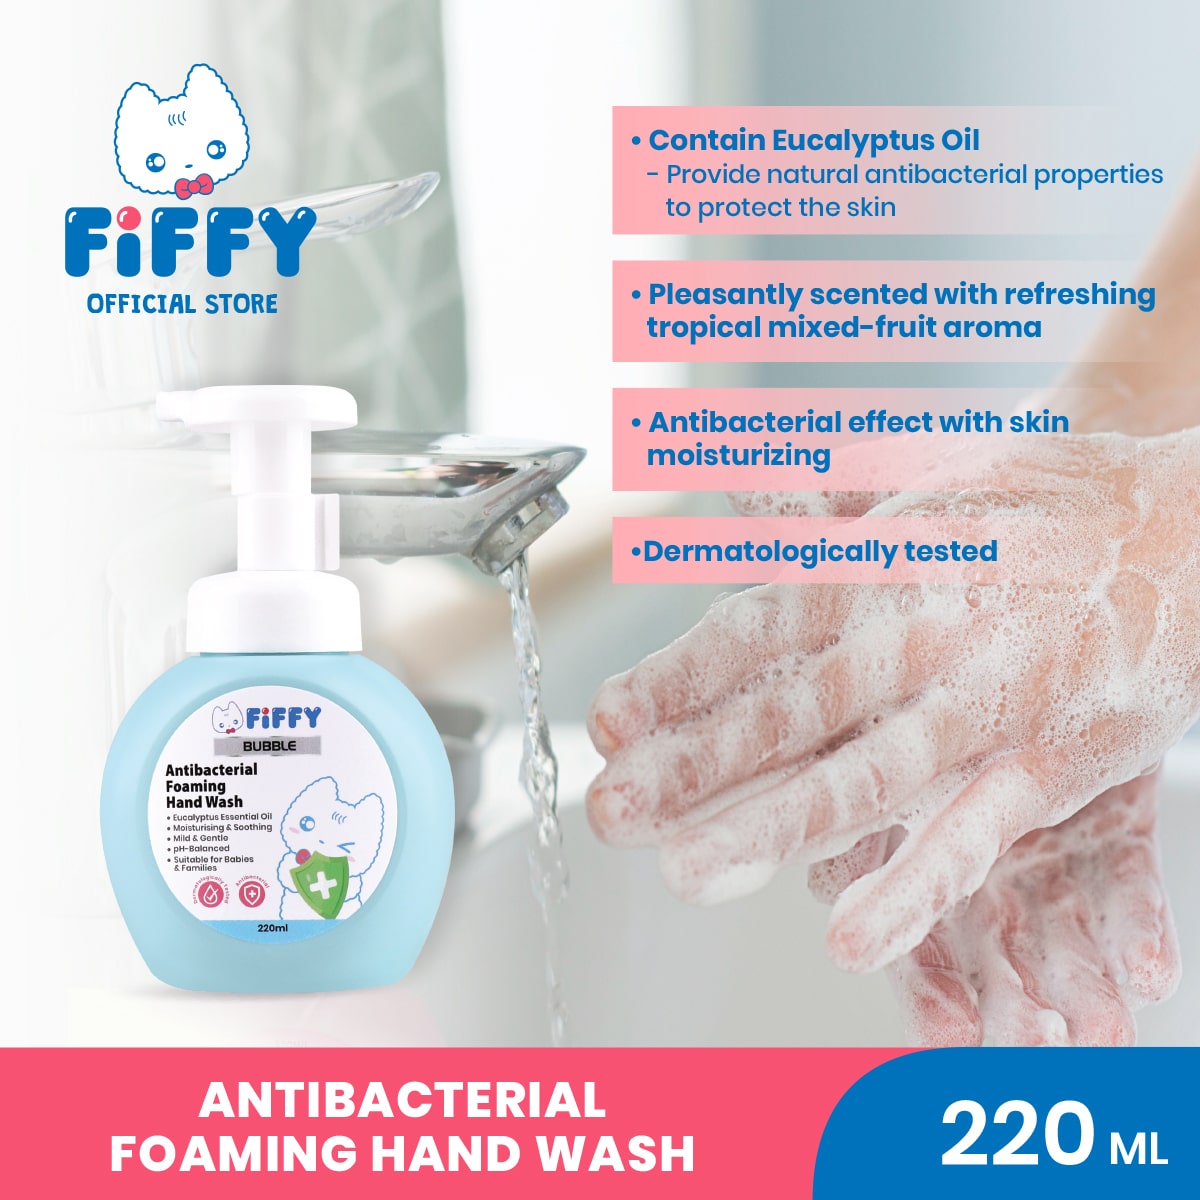 FIFFY ANTIBACTERIAL FOAMING HAND WASH